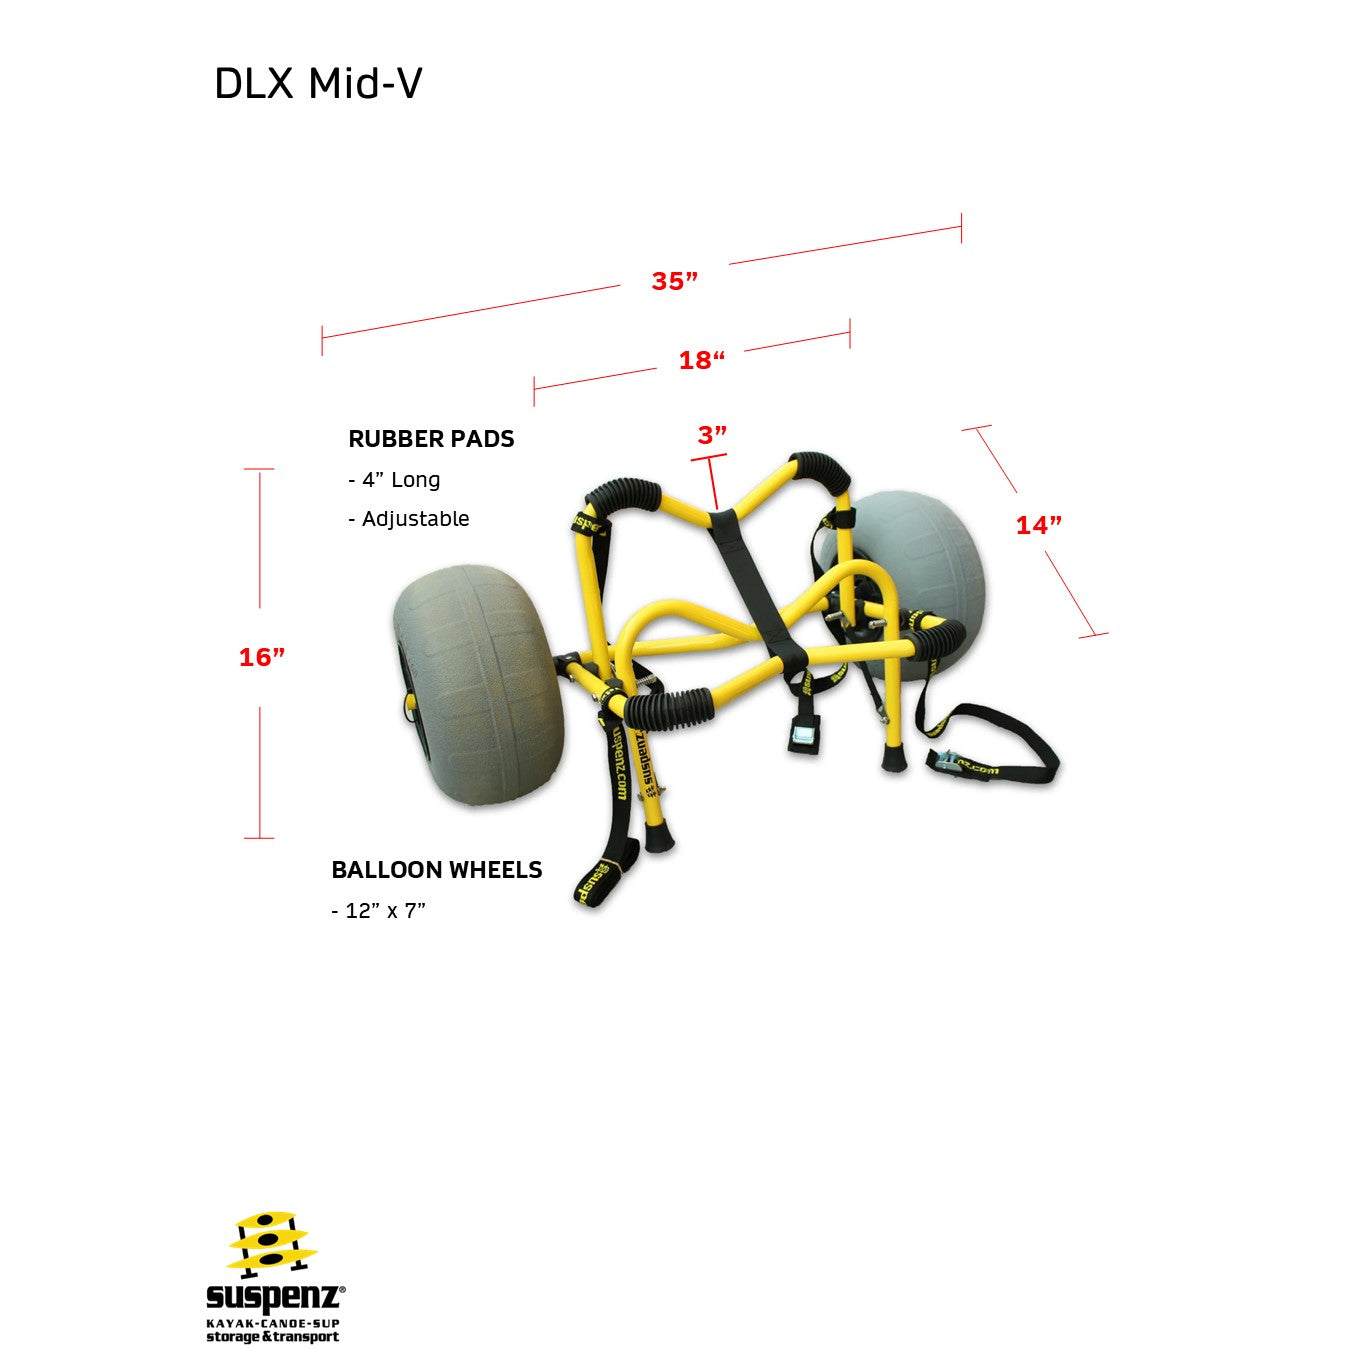 DLX Beach Cart Mid-V dimensions